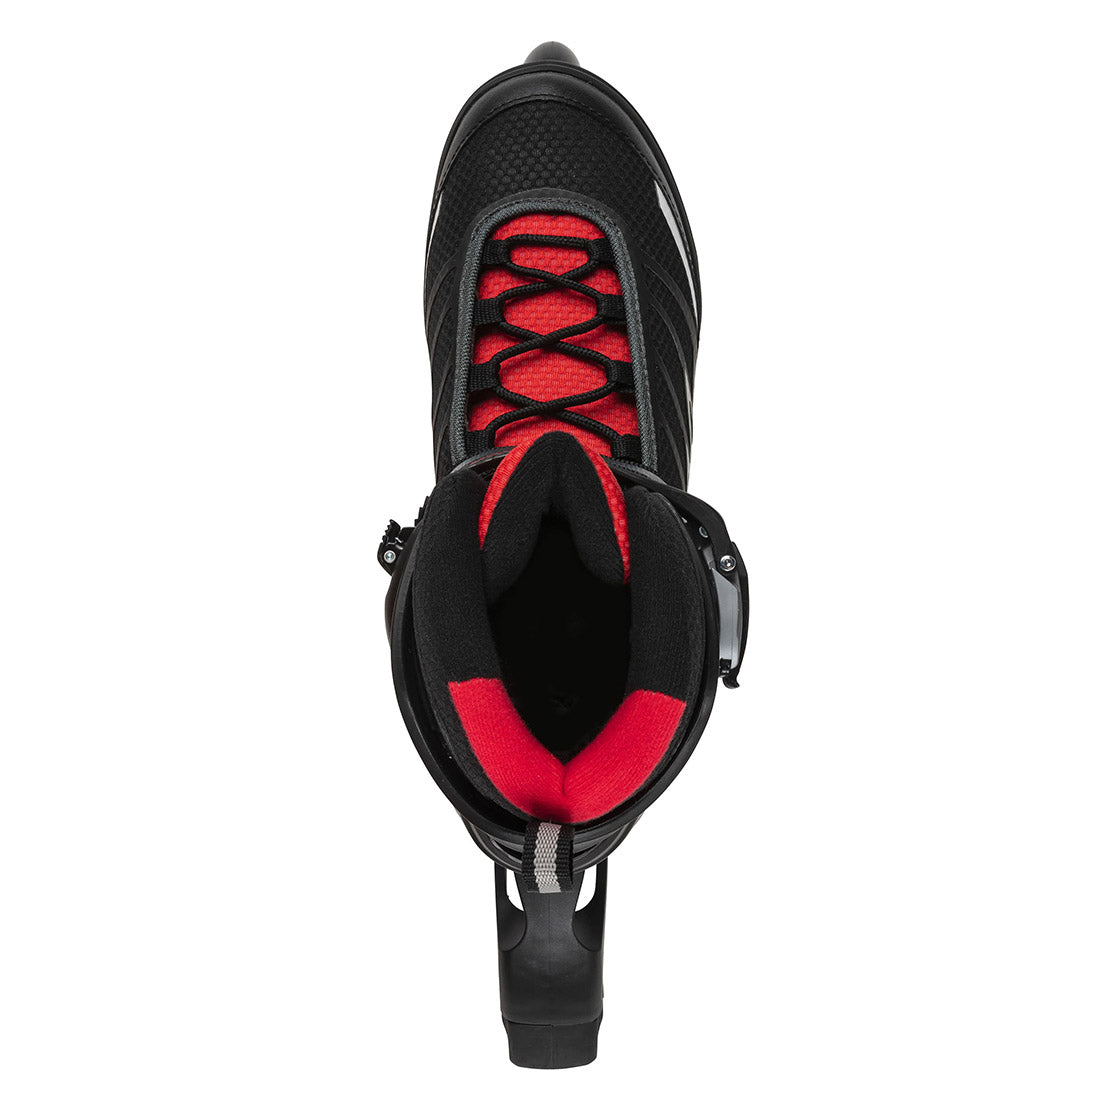 Bladerunner Advantage Pro XT - Black/Red Inline Rec Skates